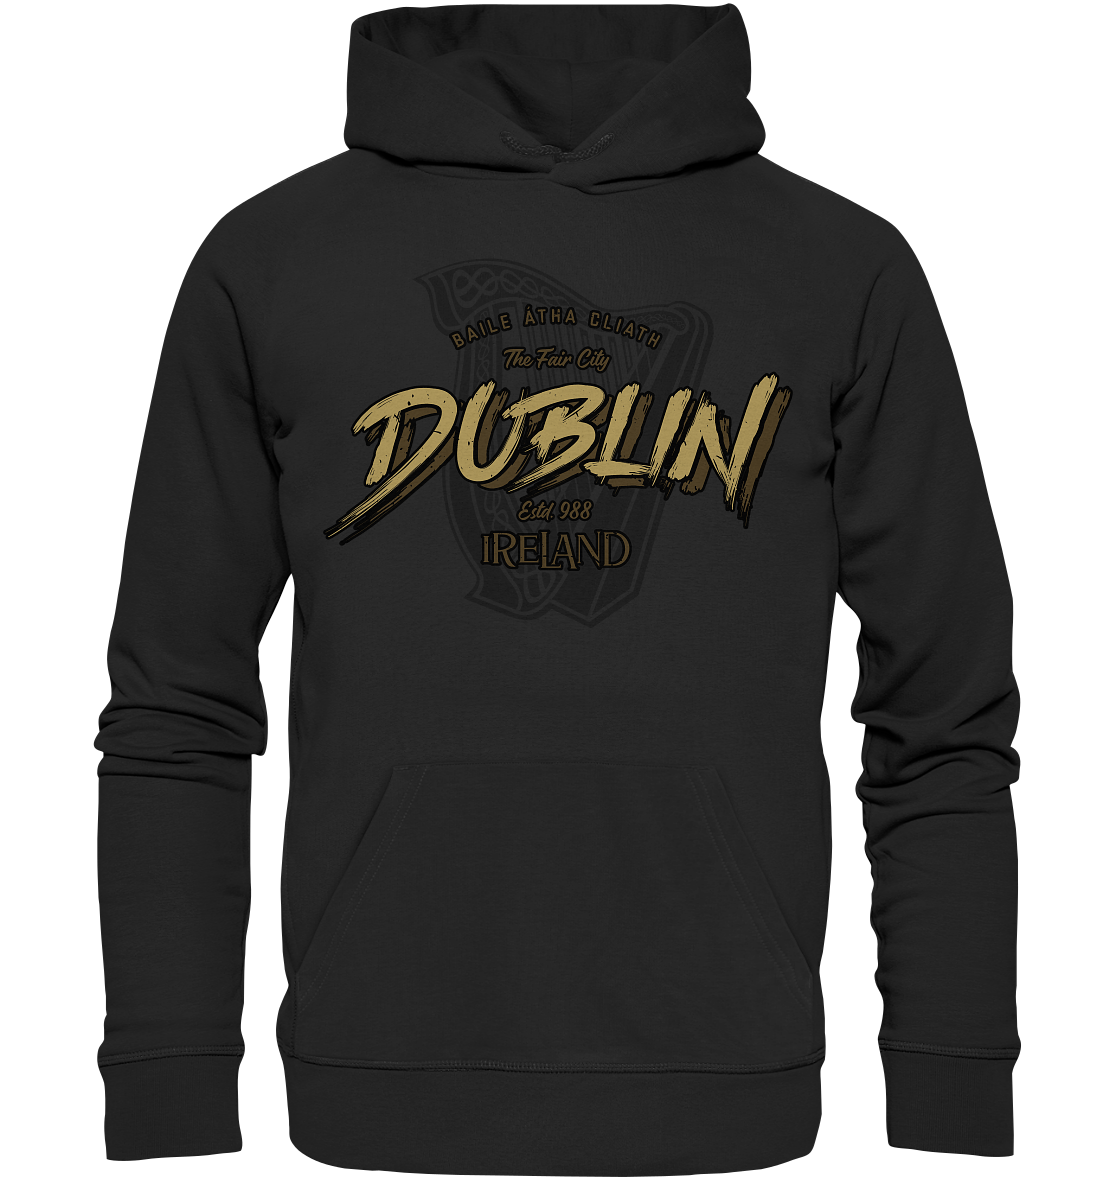 Dublin "The Fair City" - Premium Unisex Hoodie